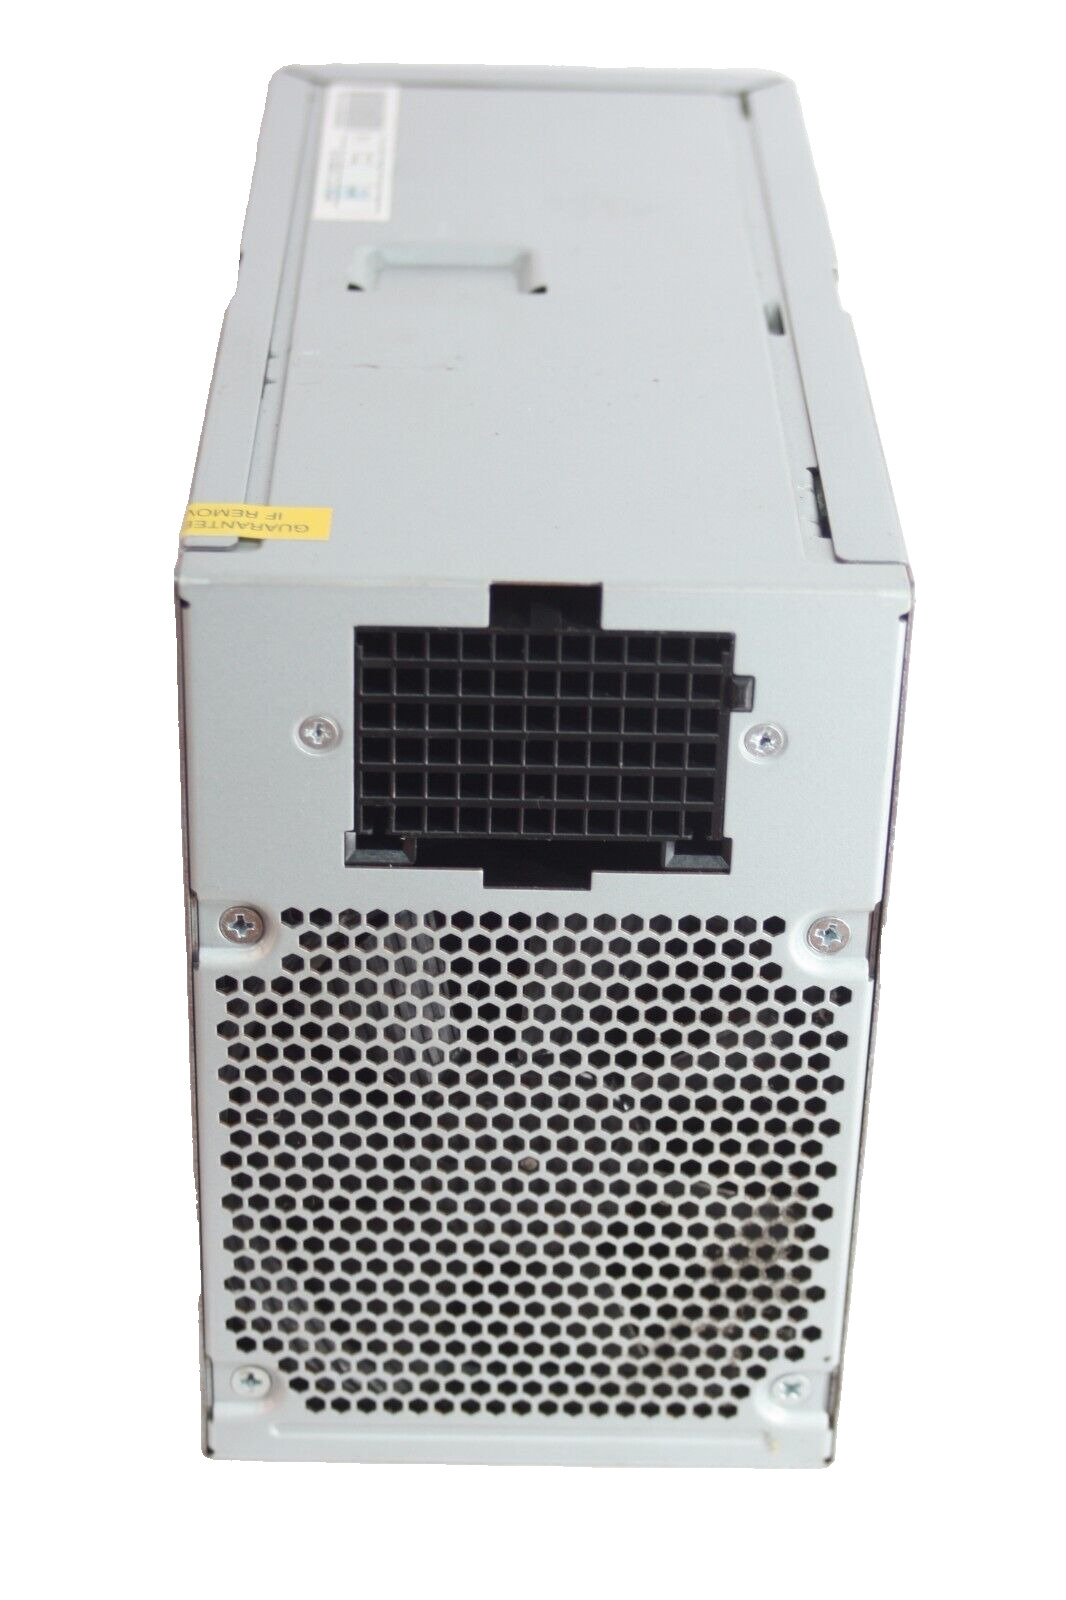 H1100EF-00 N1100EF-00 1100W G821T 0R622G For Dell T7500 workstation Power Supply